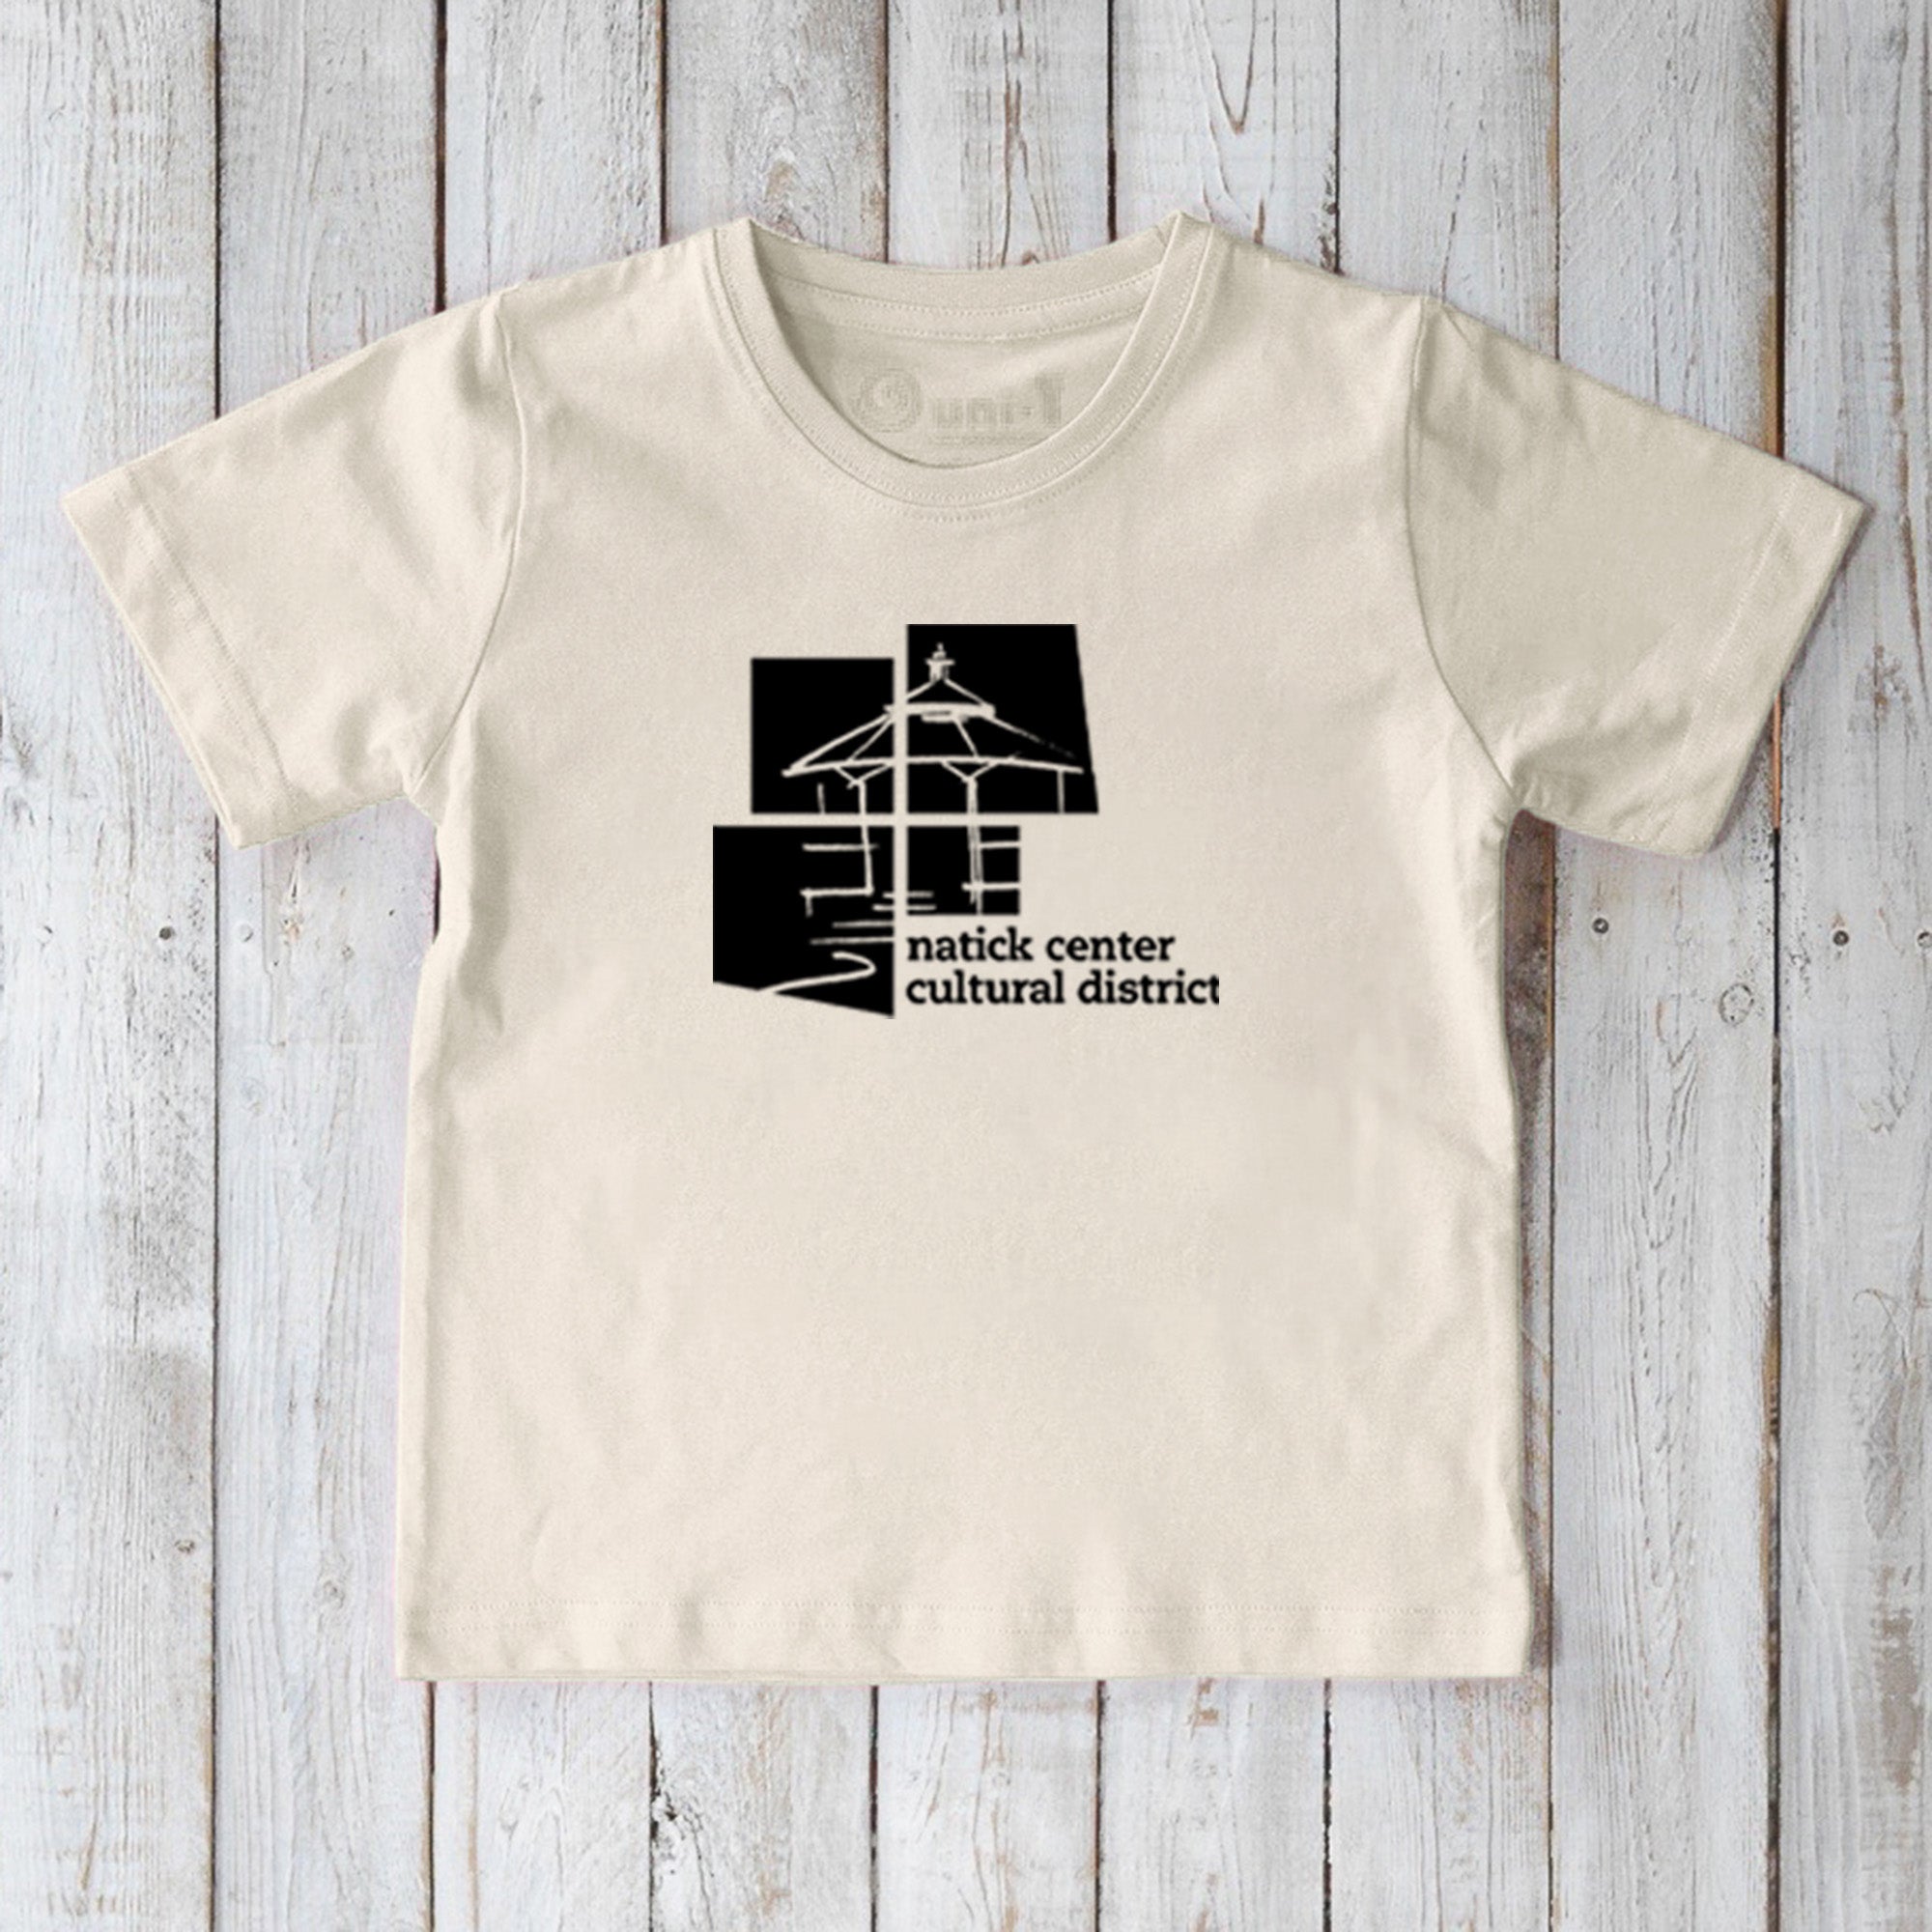 Natick Center Cultural District T-shirt for Kids Uni-T